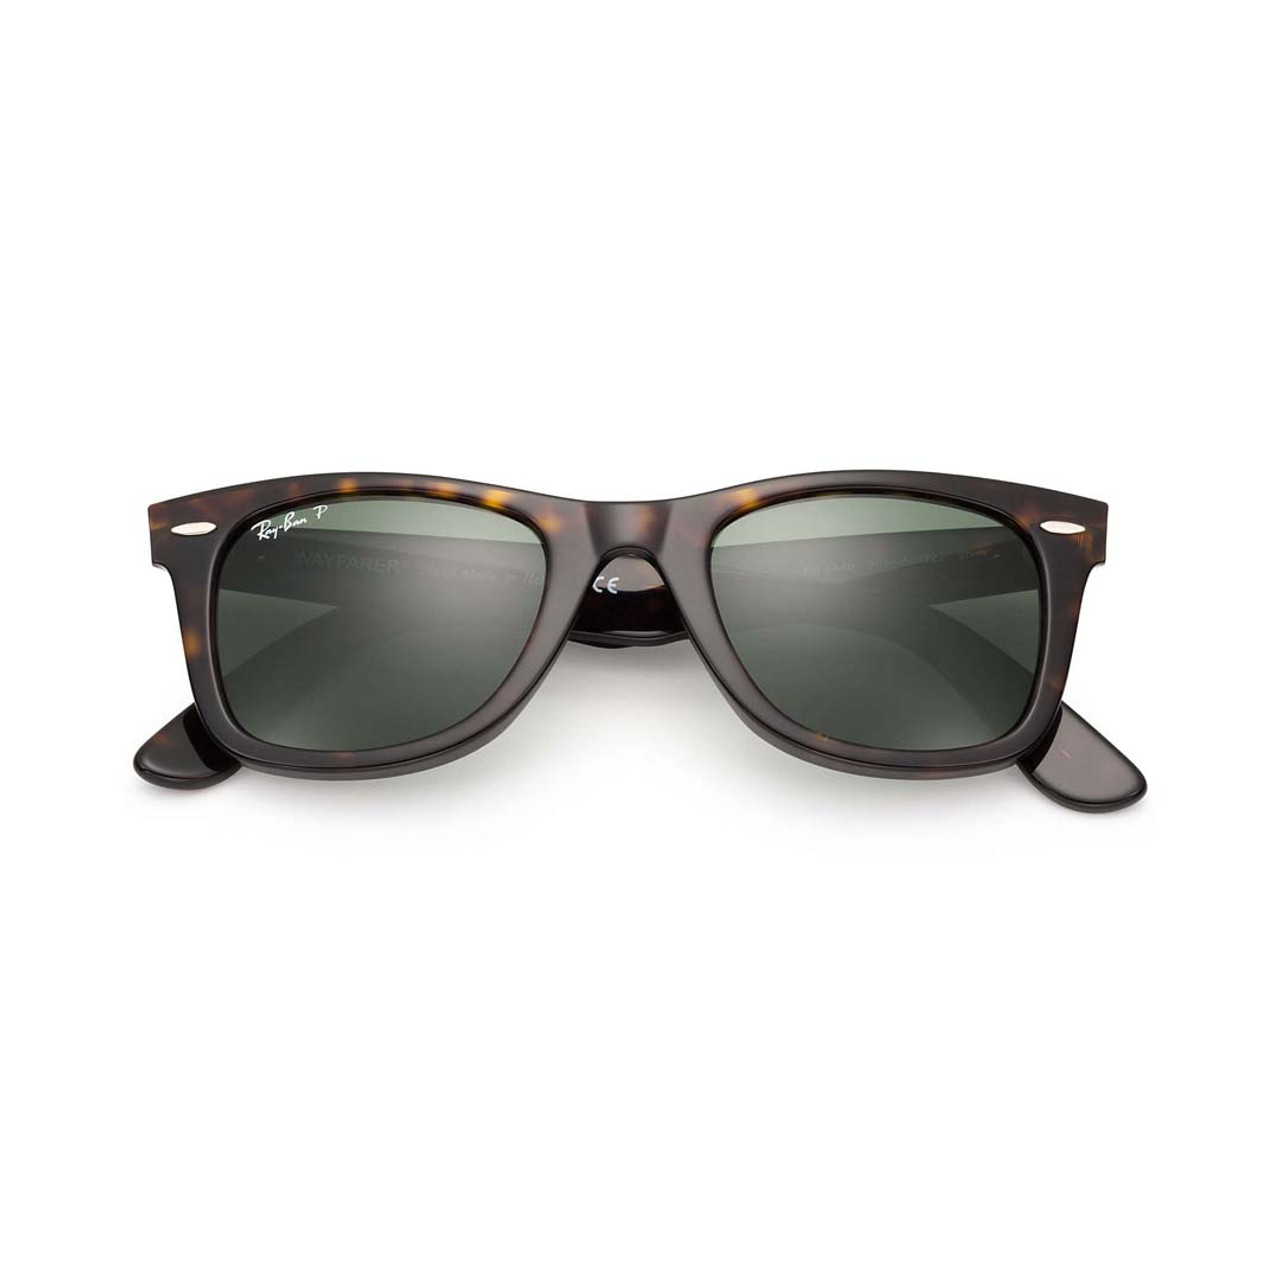 Ray-Ban Original Wayfarer Classic Polarized Sunglasses - Tortoise/Green $  213 | TYLER'S